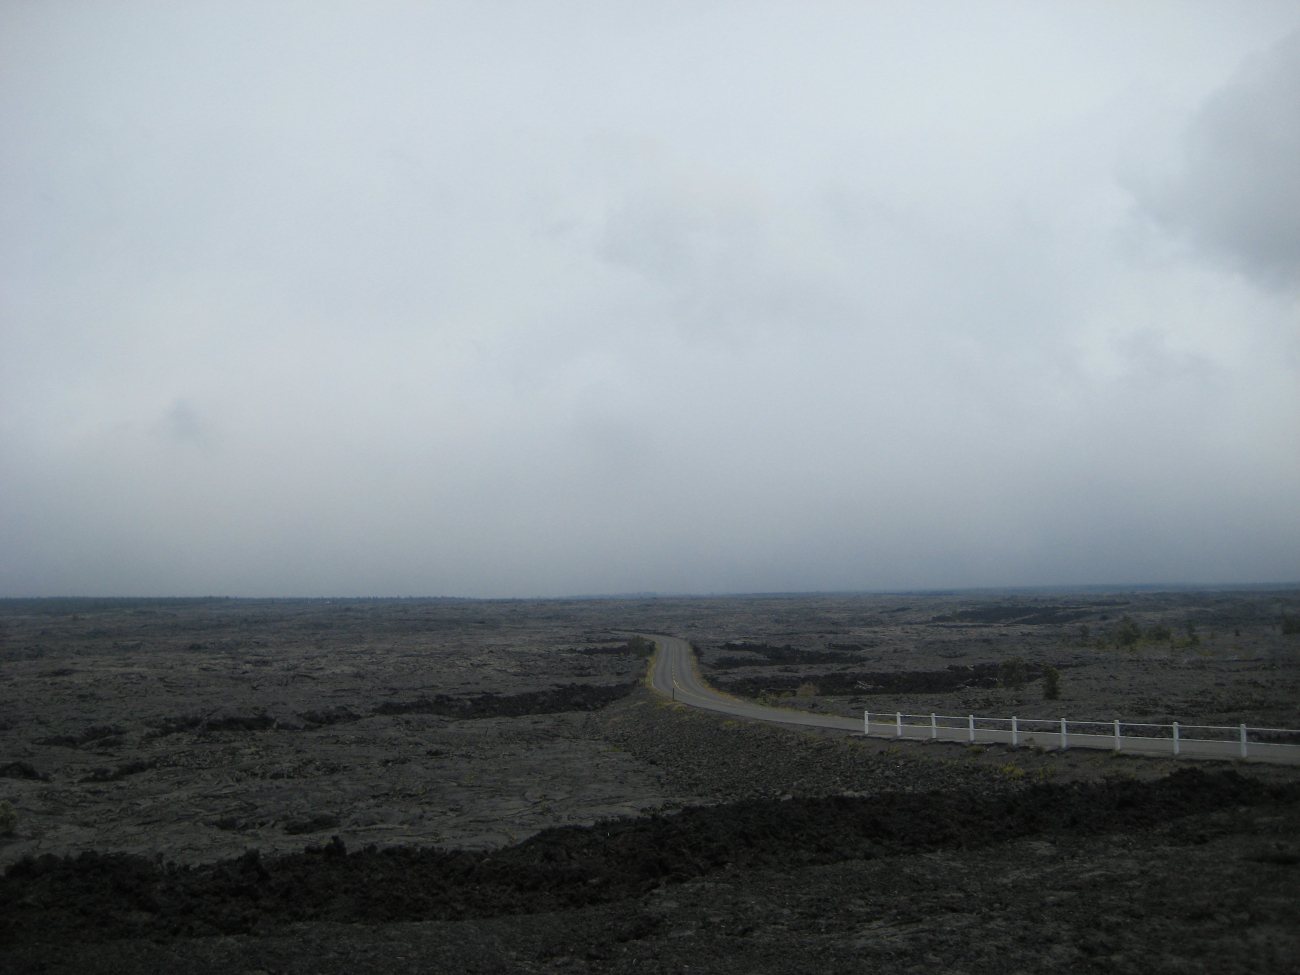 Highway built over recent lava flows